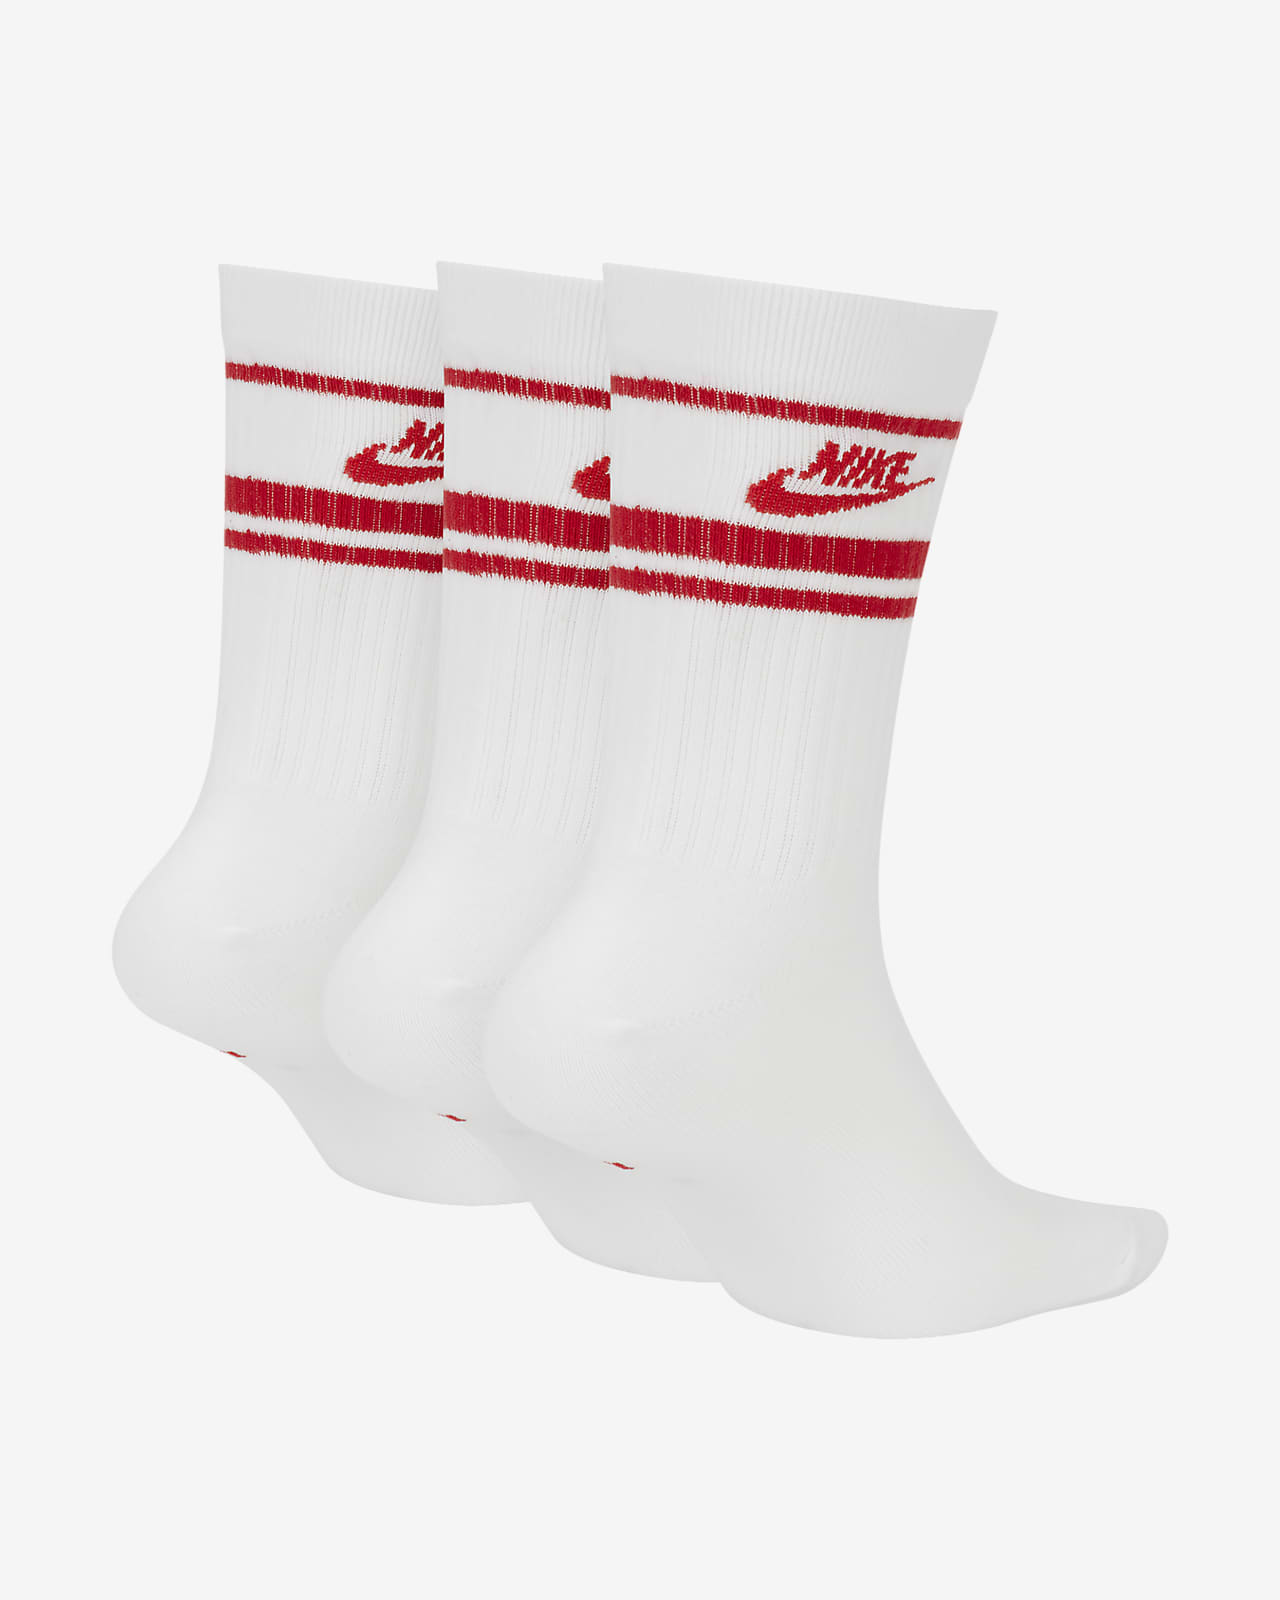 nike socks red and white